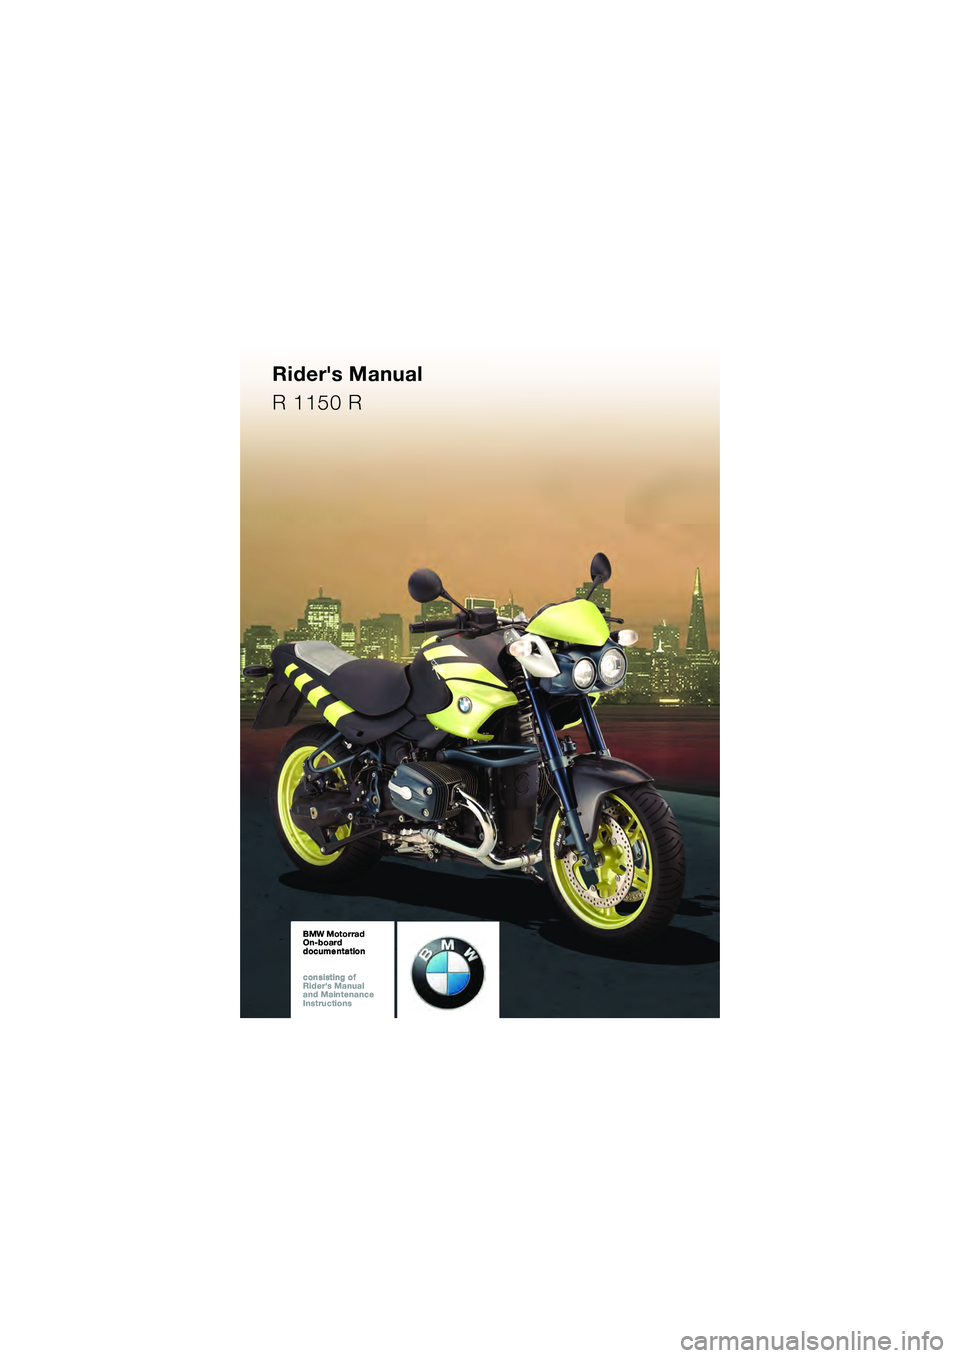 BMW MOTORRAD R 1150 R 2002  Riders Manual (in English) BMW Motorrad
On-board  
documentation
consisting of  
Riders Manual  
and Maintenance  
InstructionsBMW Motorrad
On-board  
documentation
consisting of  
Riders Manual  
and Maintenance  
Instructio